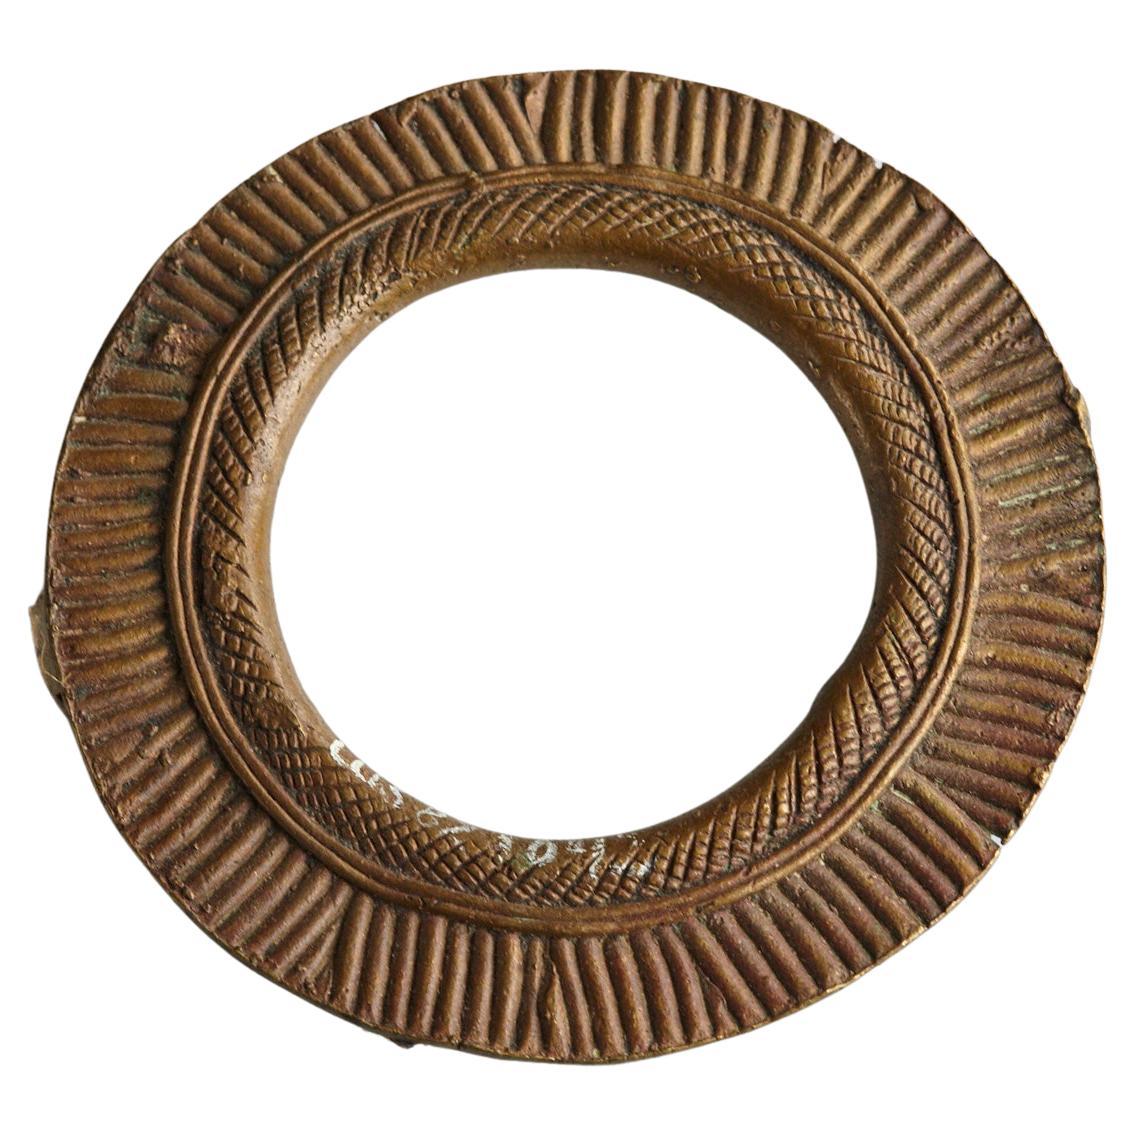 Bronze Currency Bracelet/Manilla, Beri People, Sudan, 19th Century - No 1